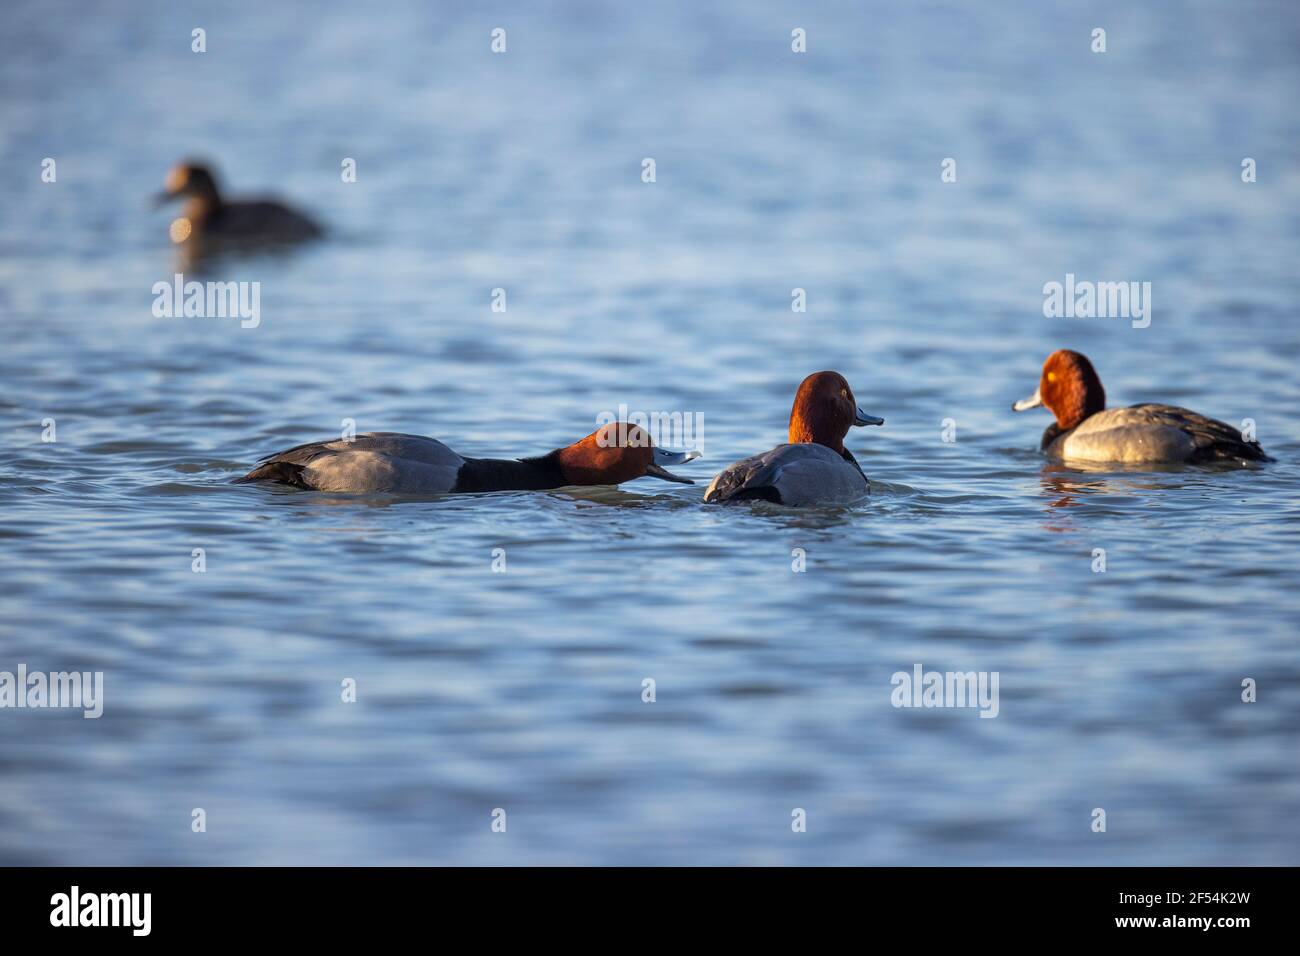 Grupo de patos de cabeza roja nadando en un lago. Foto de stock